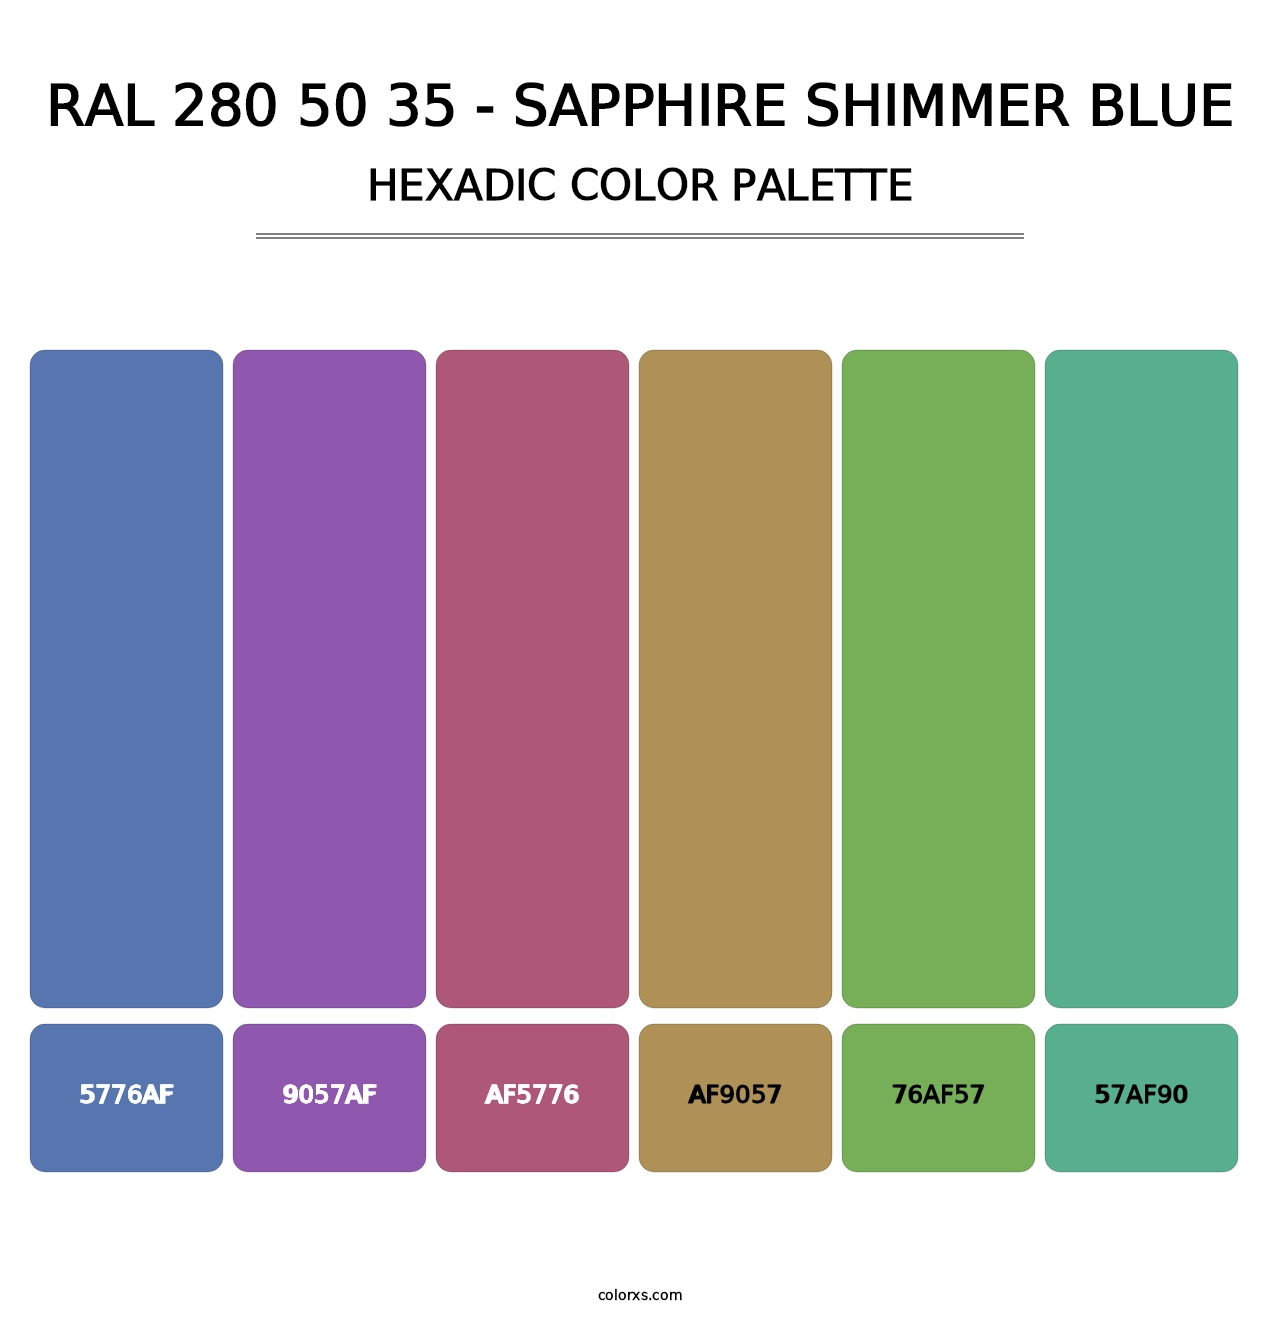 RAL 280 50 35 - Sapphire Shimmer Blue - Hexadic Color Palette